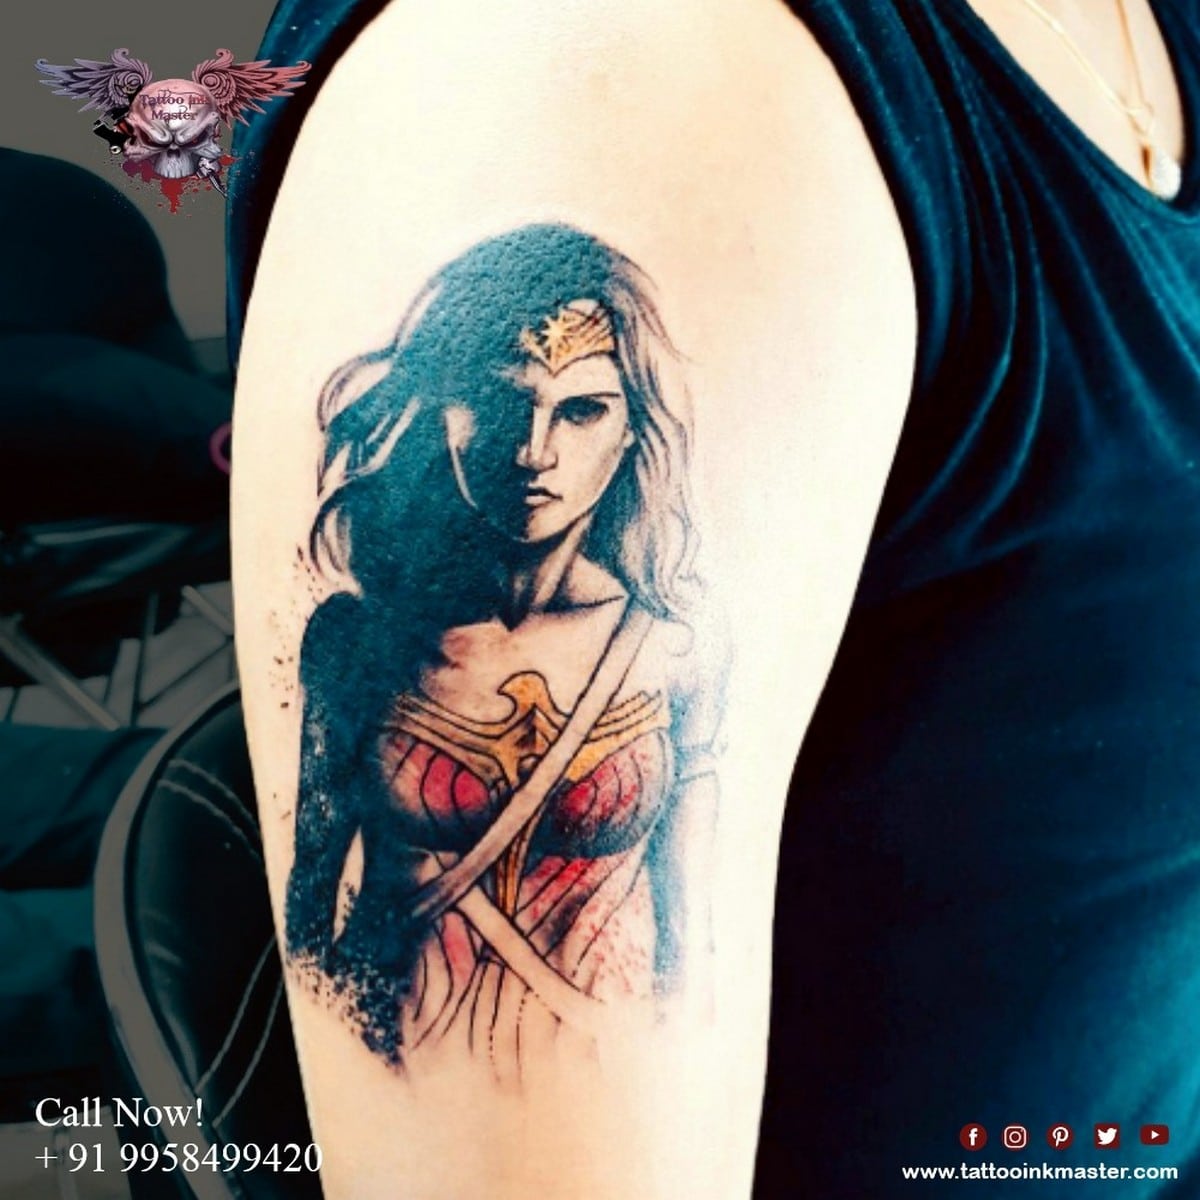 Steve Phipps : Tattoos : Realistic : Wonder Woman